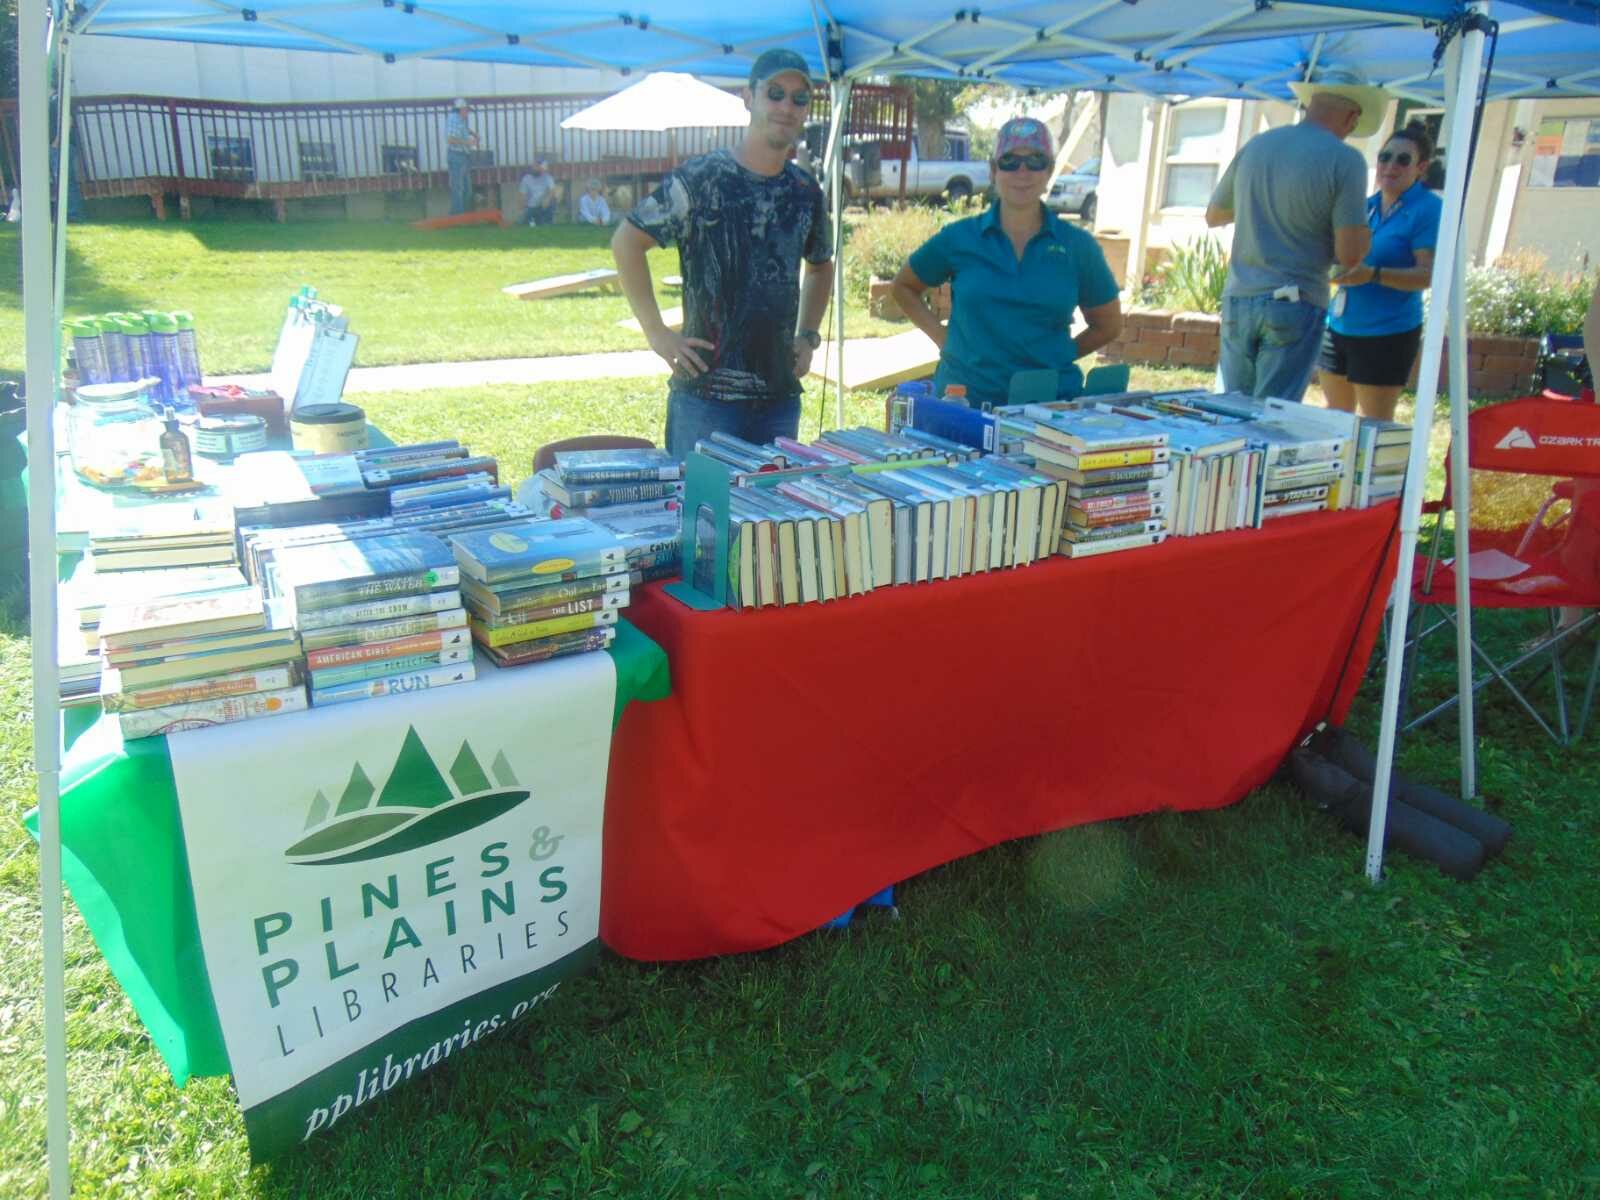 2021 Simla Day Vendor Pines & Plains Libraries